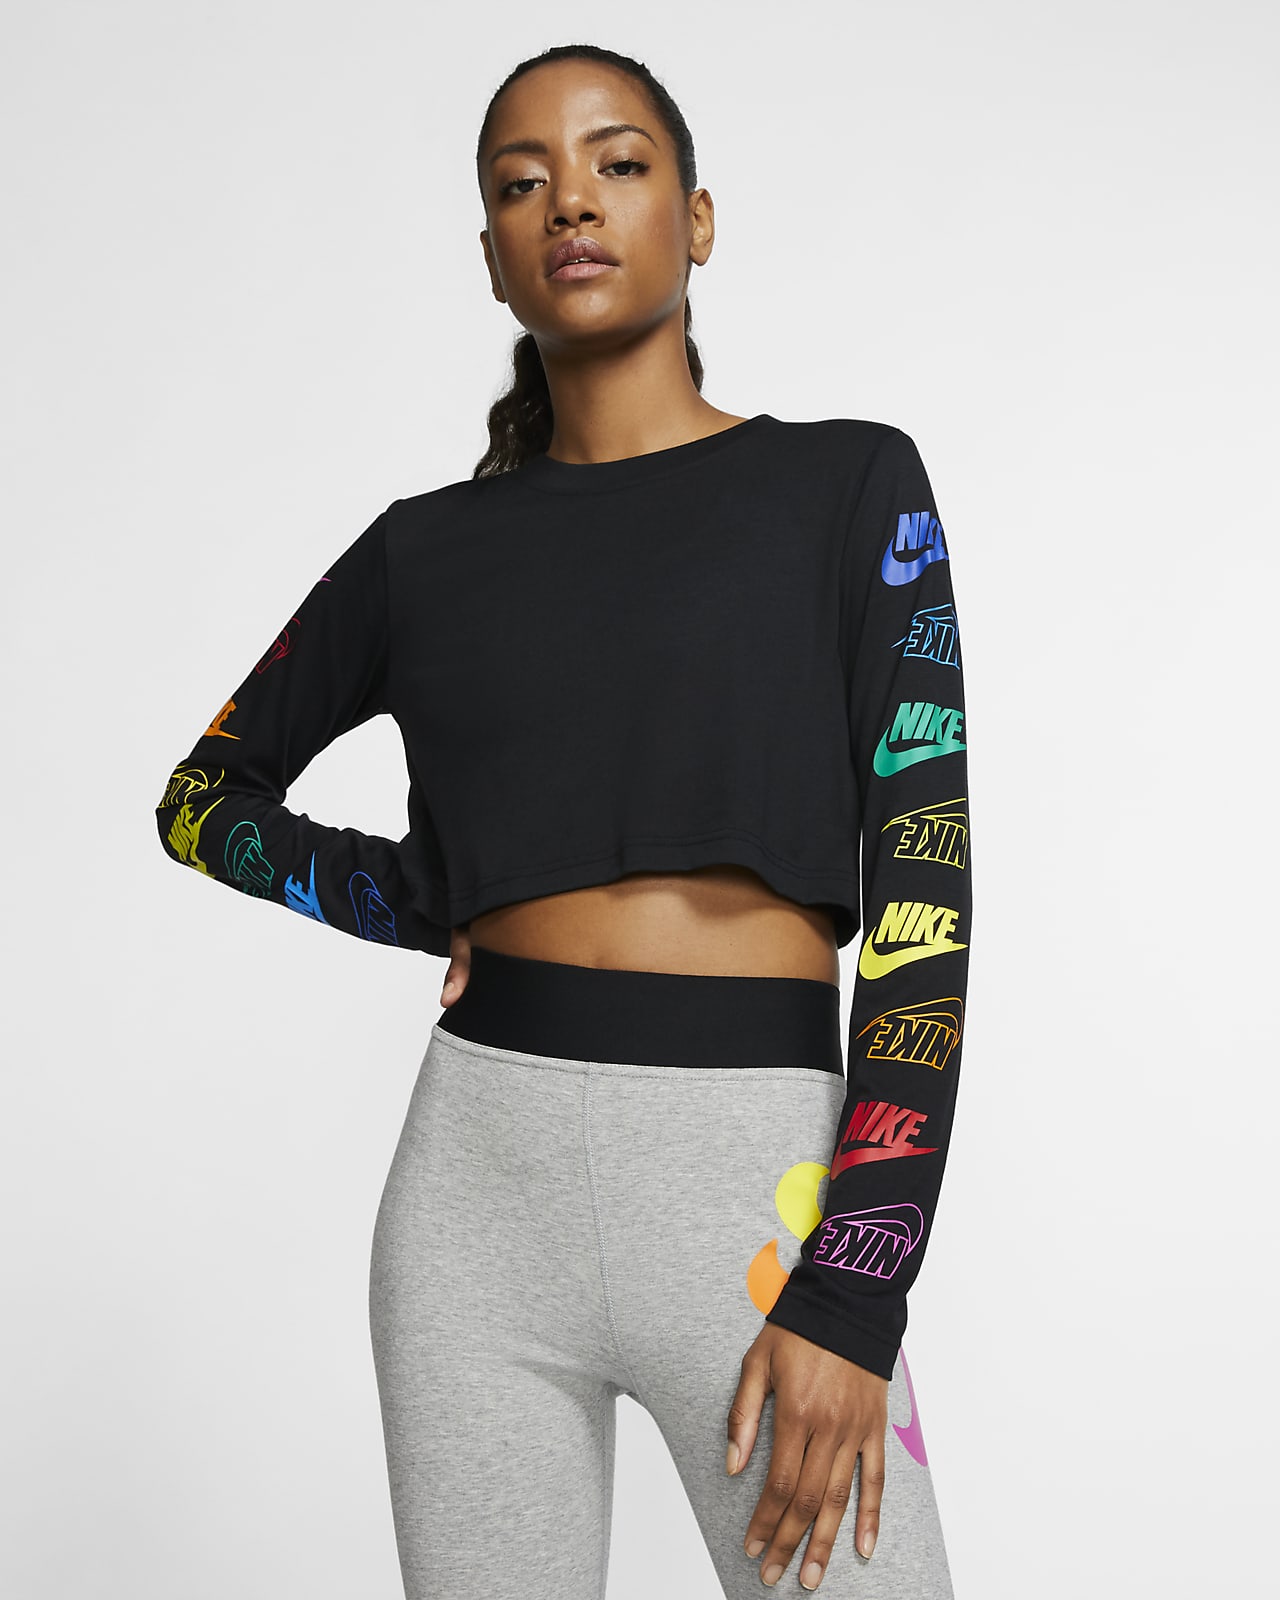 Tee-shirt à manches longues Nike Sportswear pour Femme